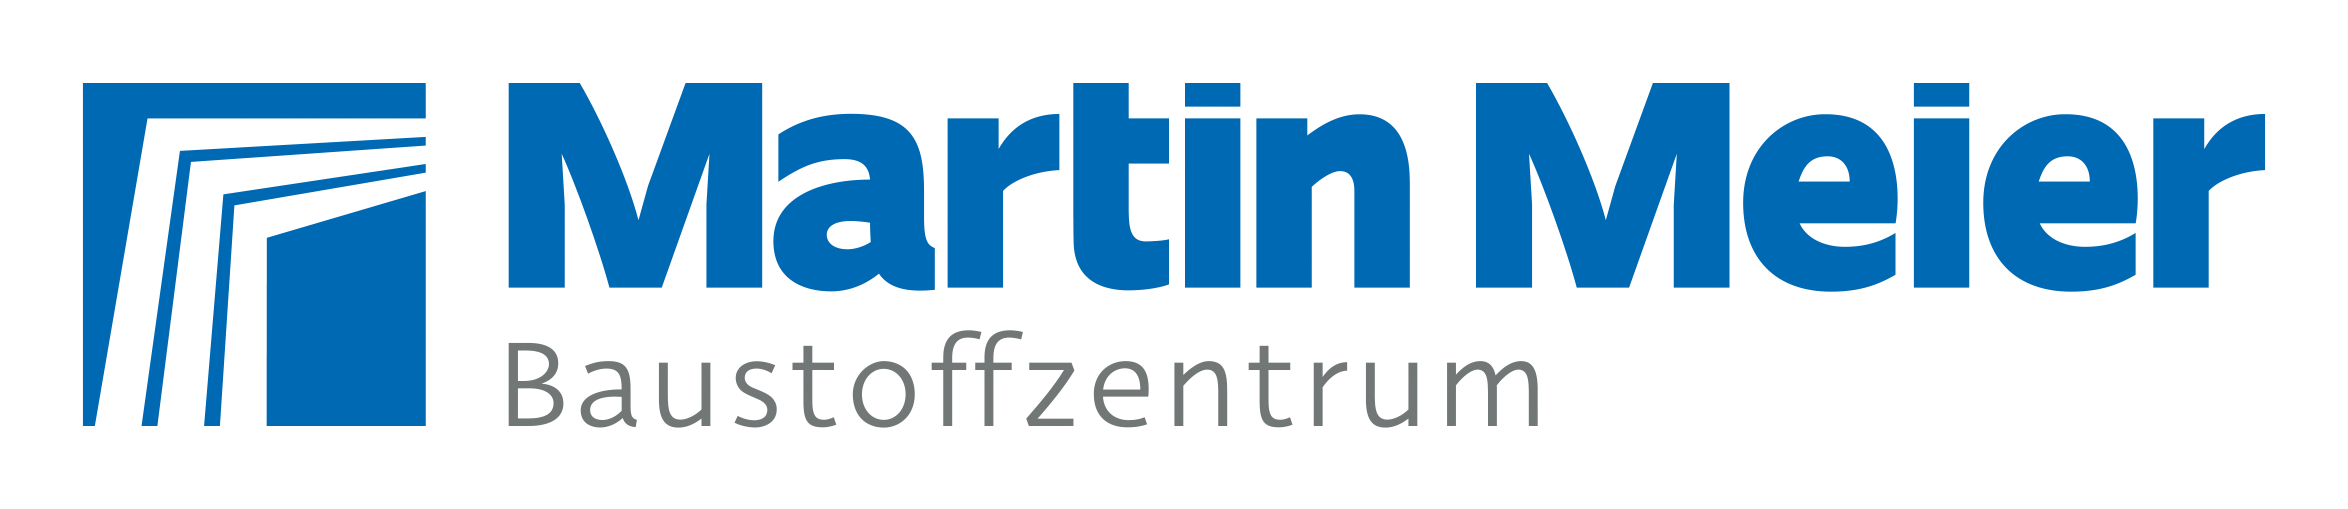 Martin_Meier_Baustoffzentrum_Logo_quer